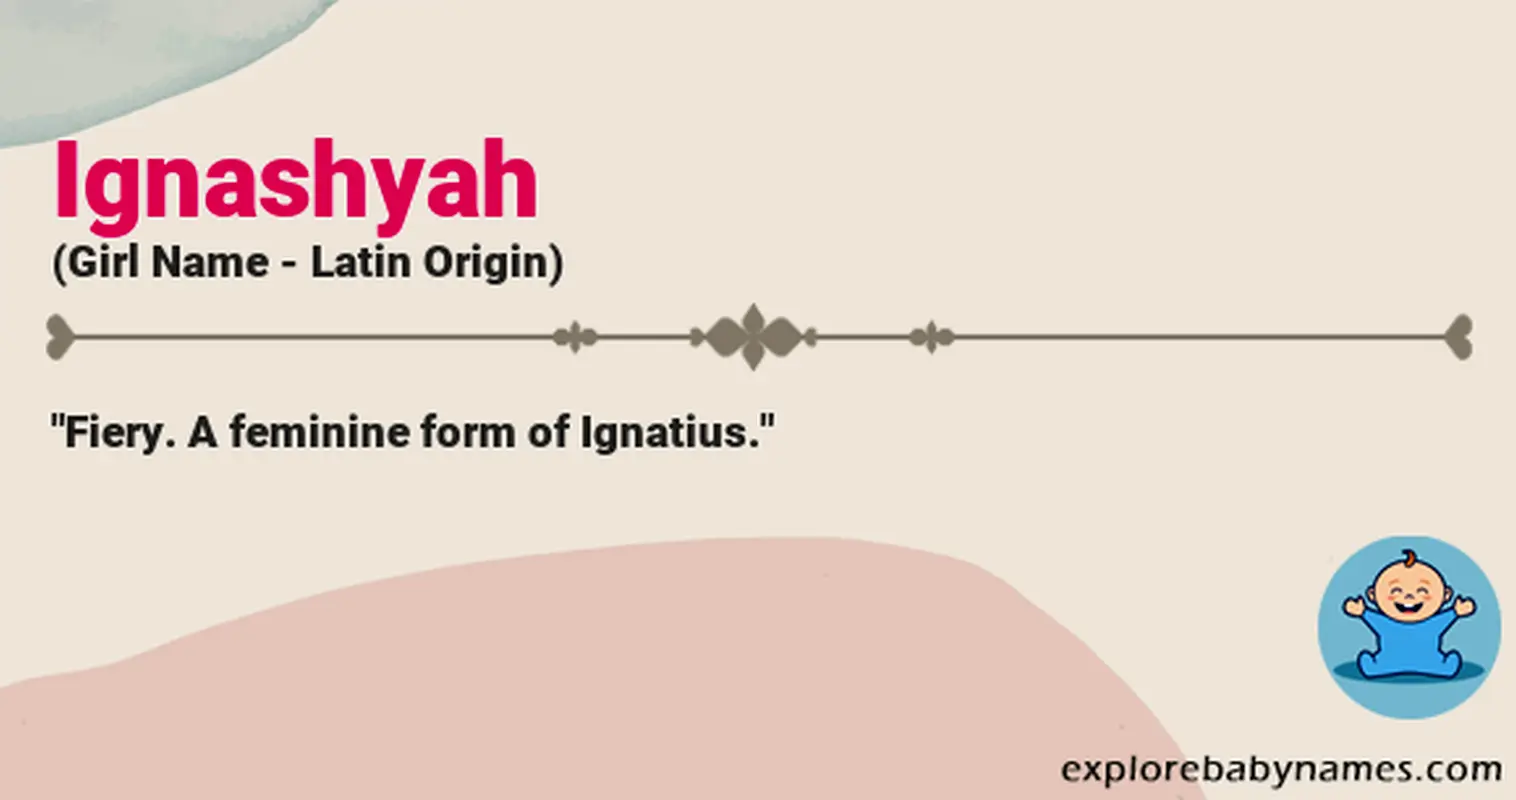 Meaning of Ignashyah